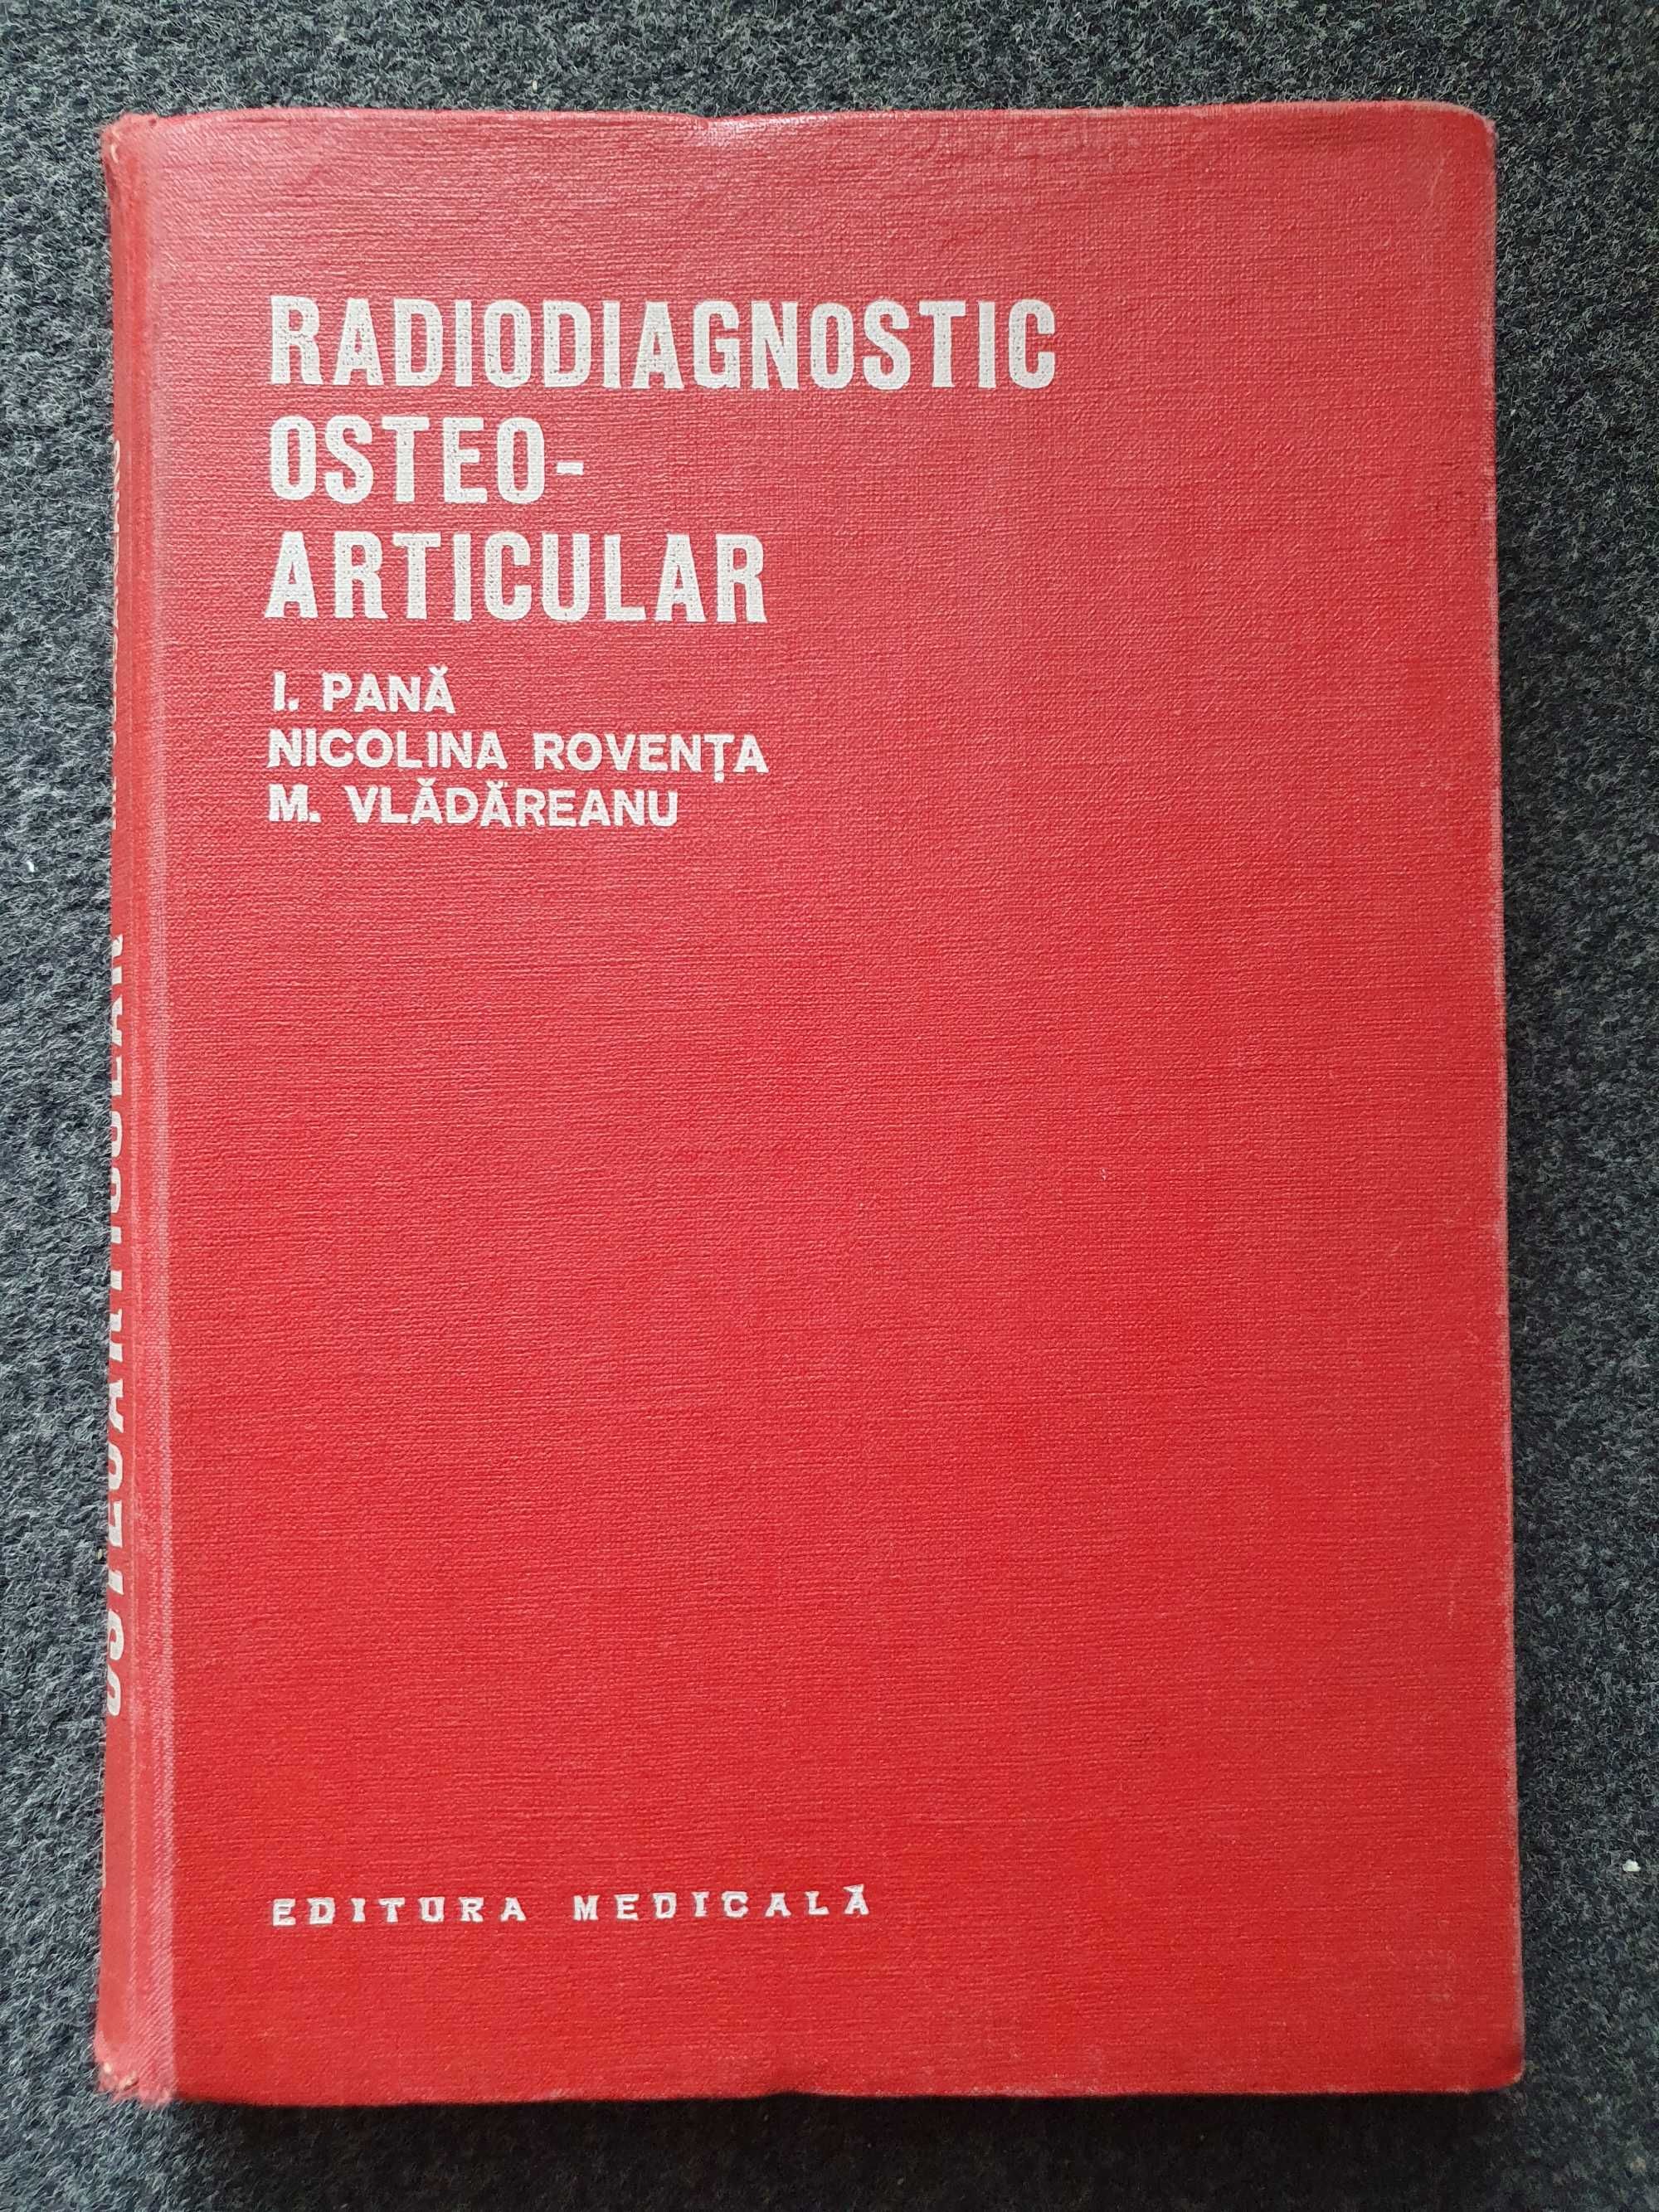 RADIODIAGNOSTIC OSTEO-ARTICULAR - Pana, Roventa, Vladareanu 1977